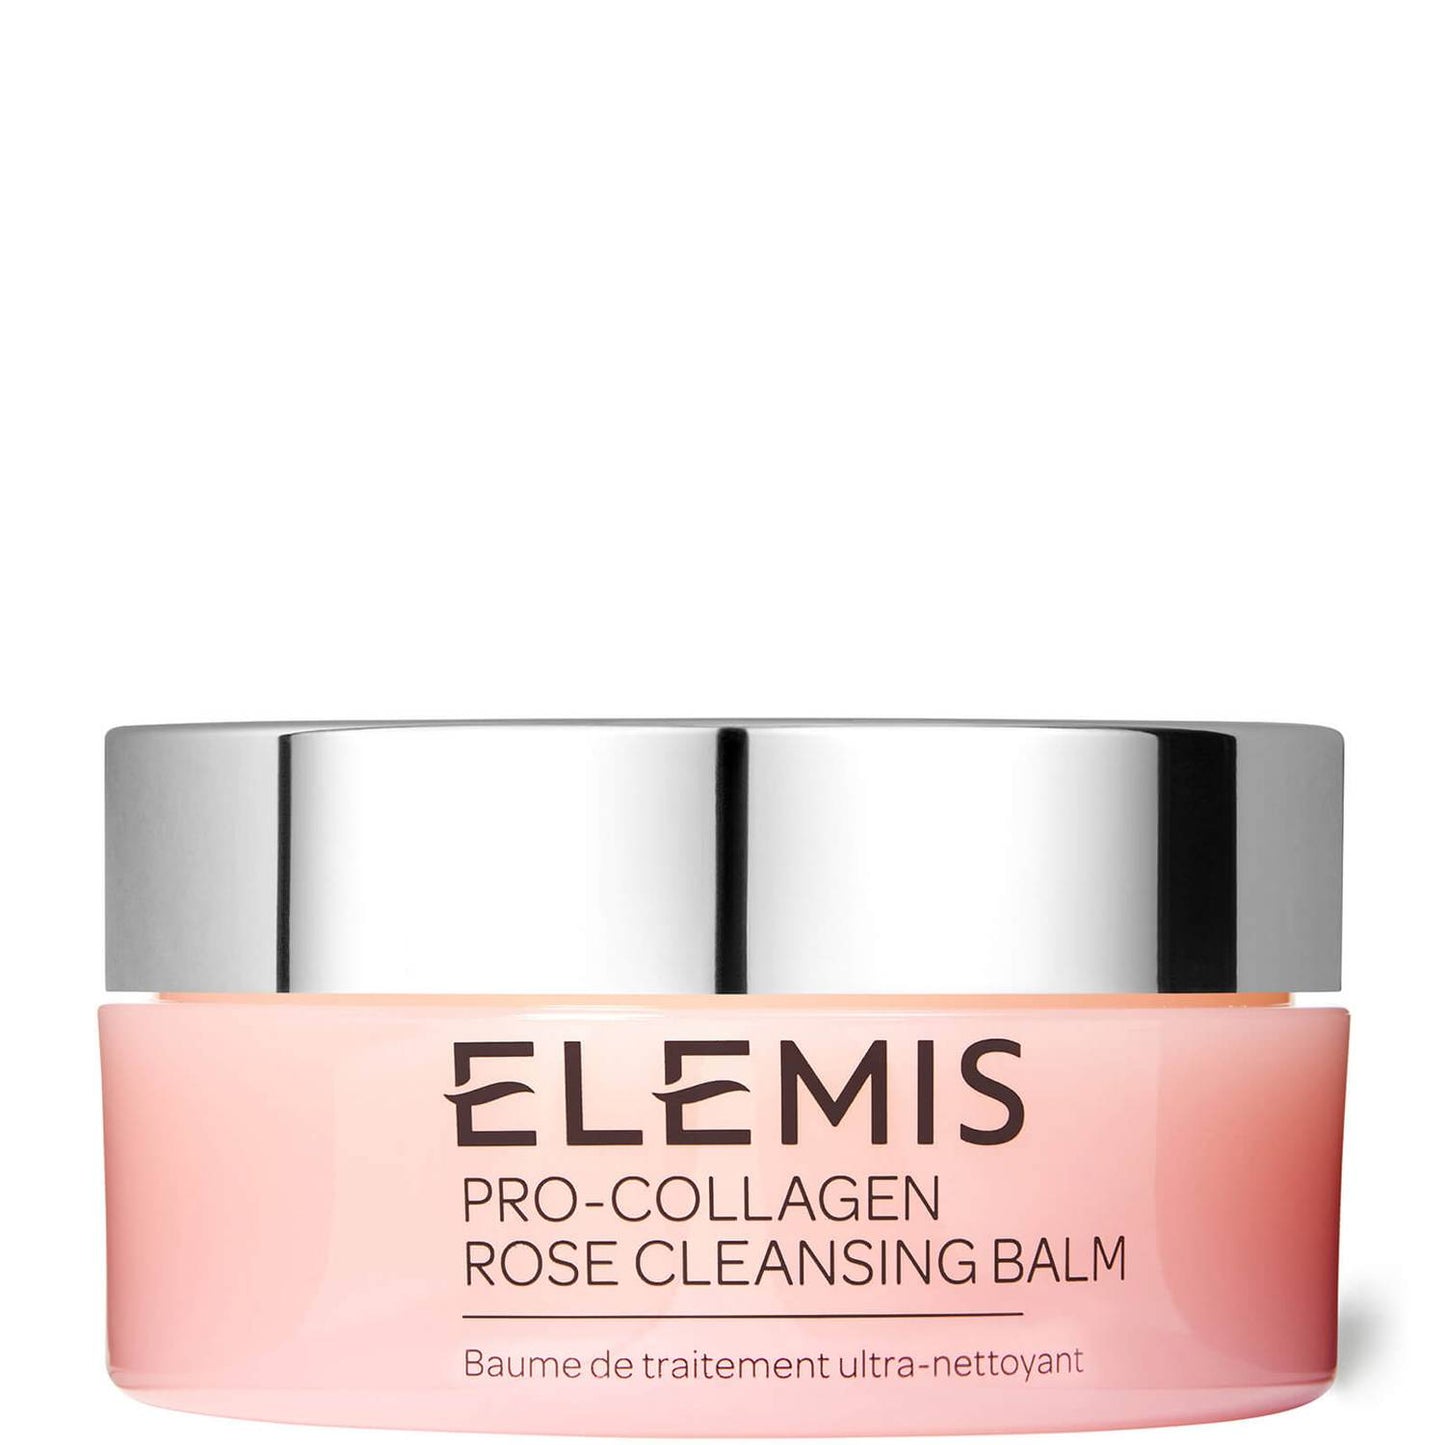 ELEMIS PRO COLLAGEN ROSE CLEANSING BALM 100g